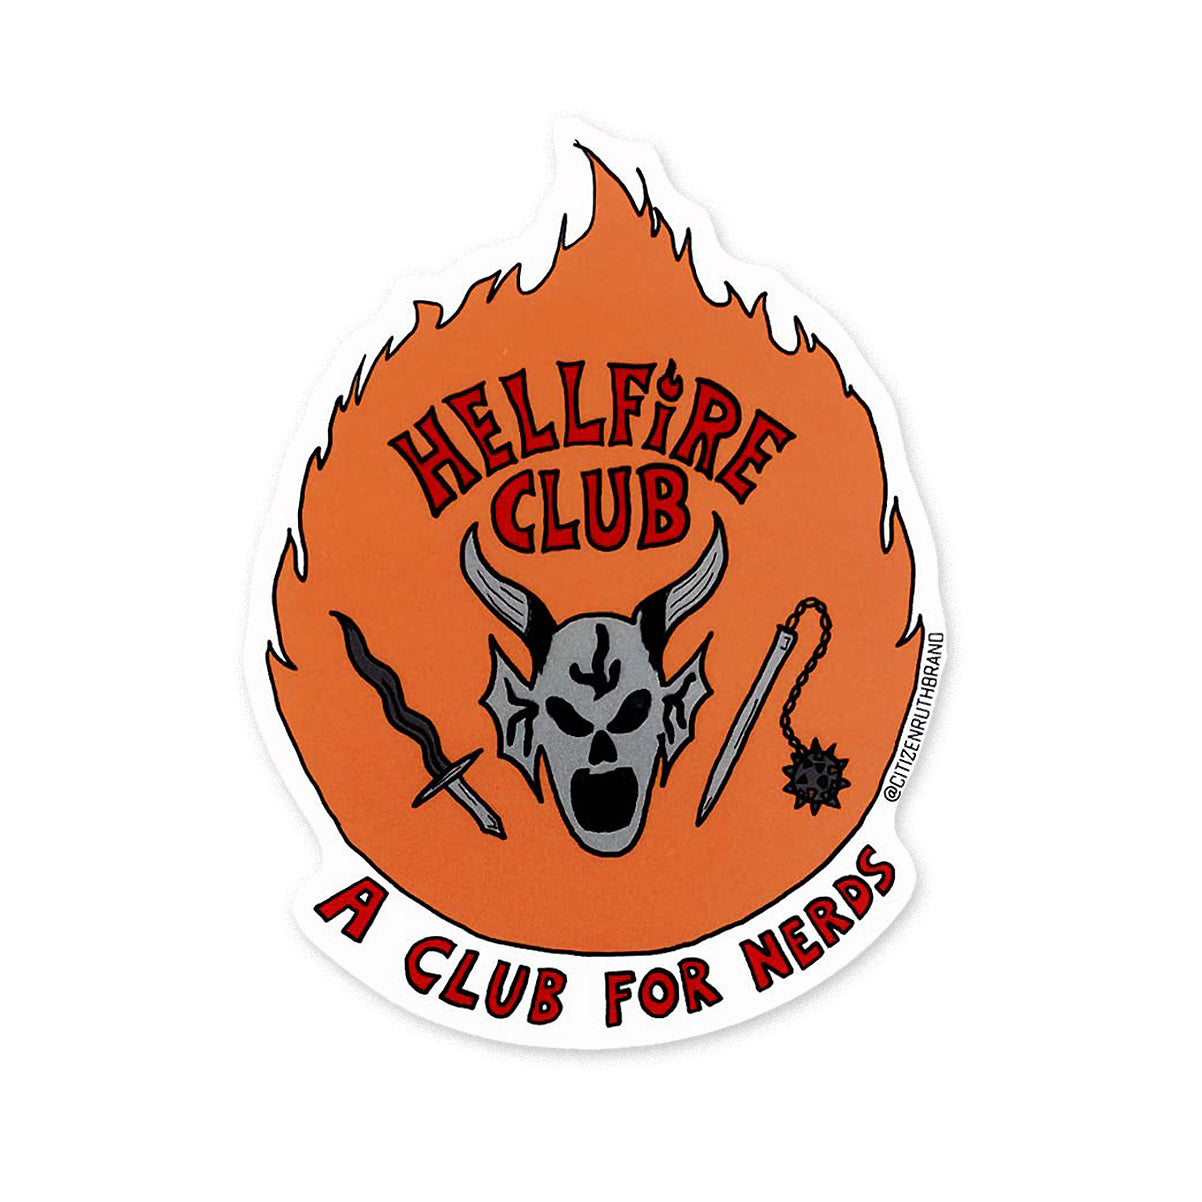 HELLFIRE CLUB FOR NERDS STICKER